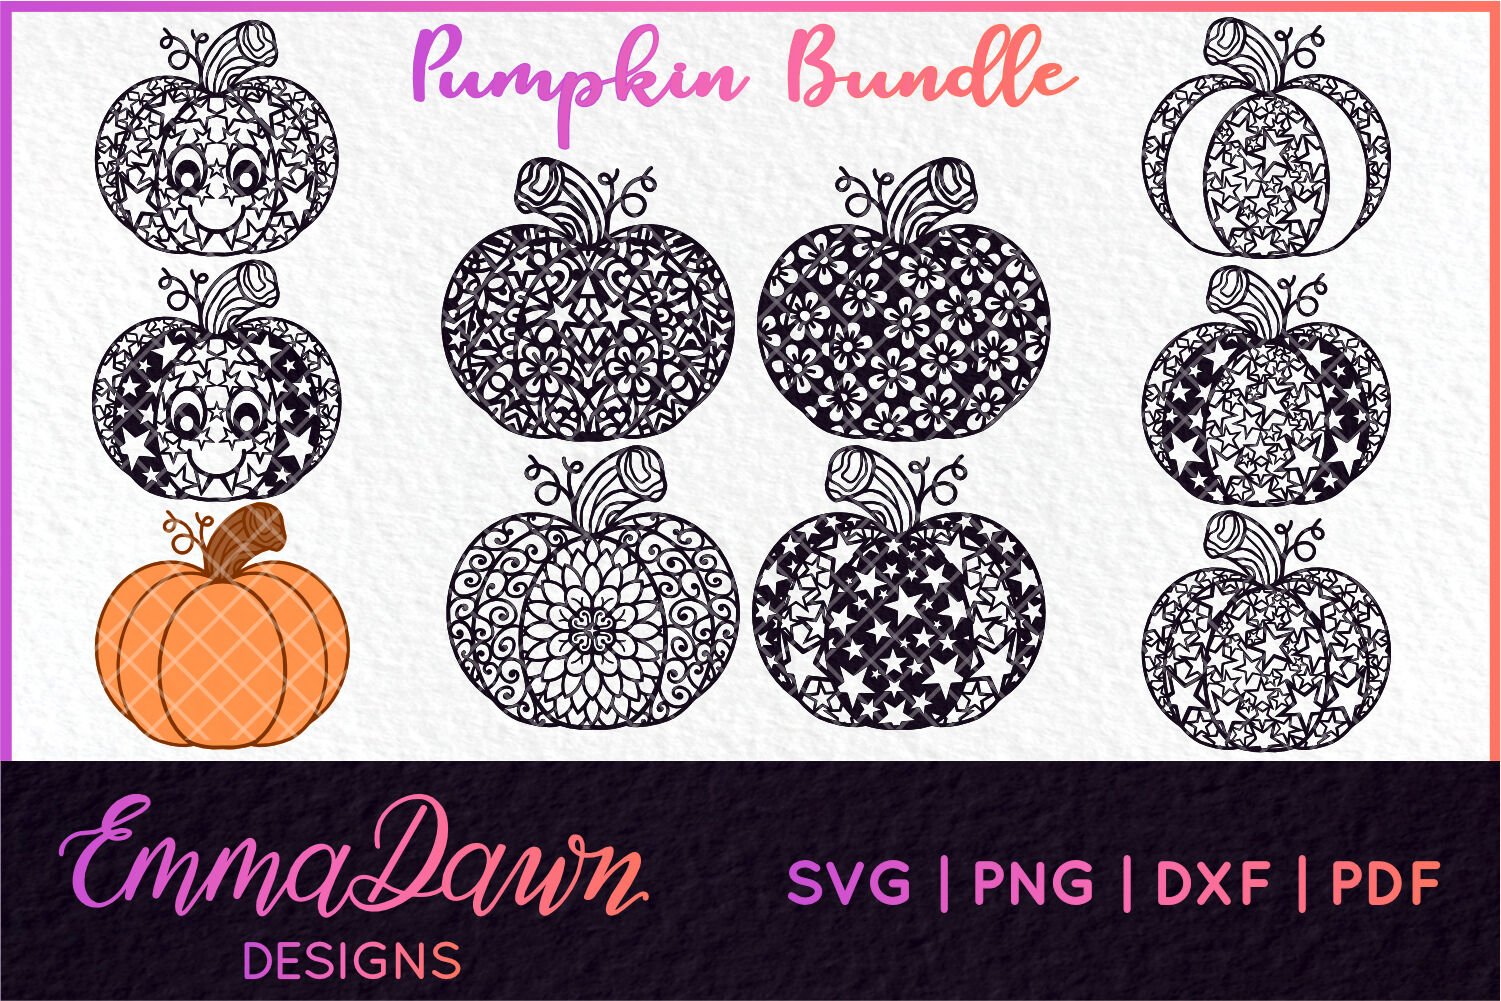 Pumpkin Bundle Halloween Fall Mandala Zentangle 10 Design By Emma Dawn Designs Thehungryjpeg Com